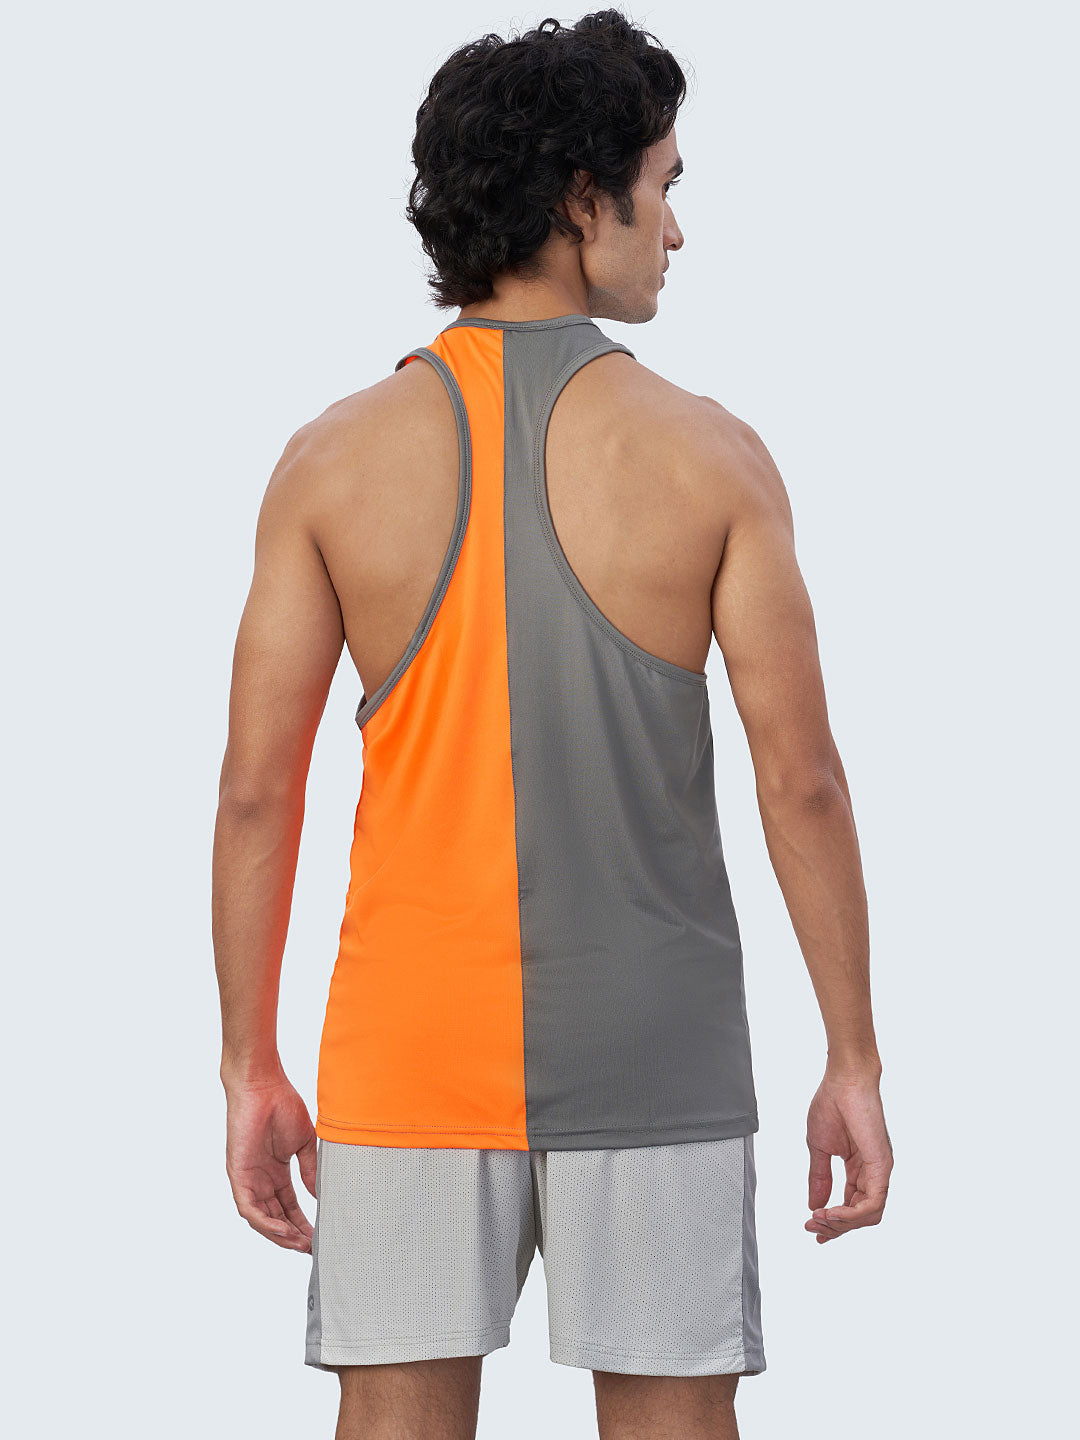 Men's Two-Tone Active Gym Vest: Orange & Grey - Front